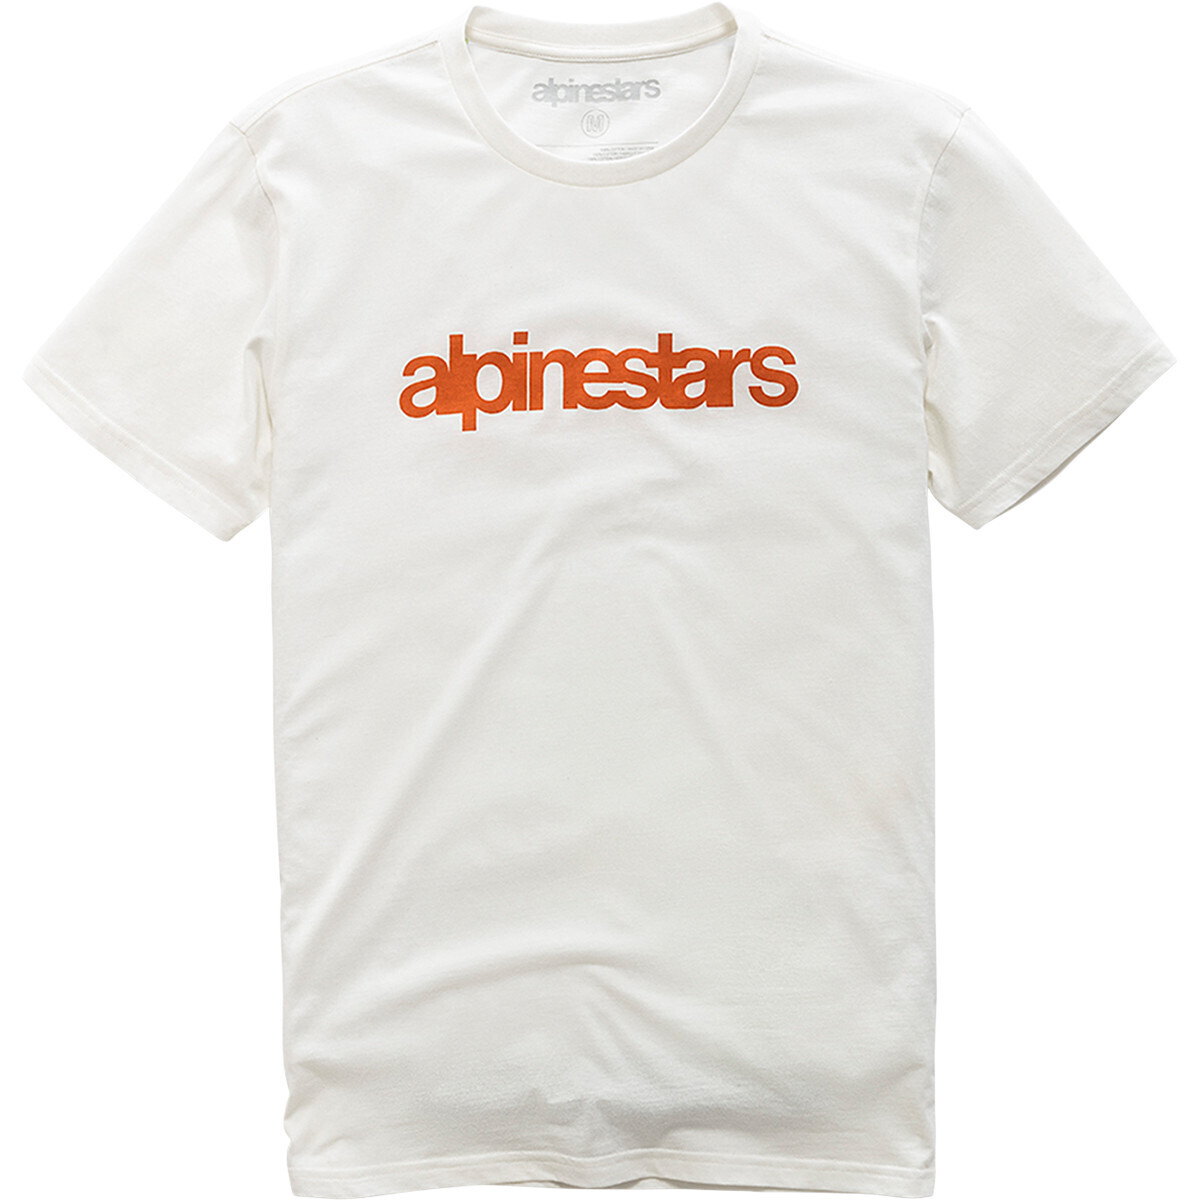 ALPINESTARS (CASUALS)
TEE Heritage Word T-Shirt